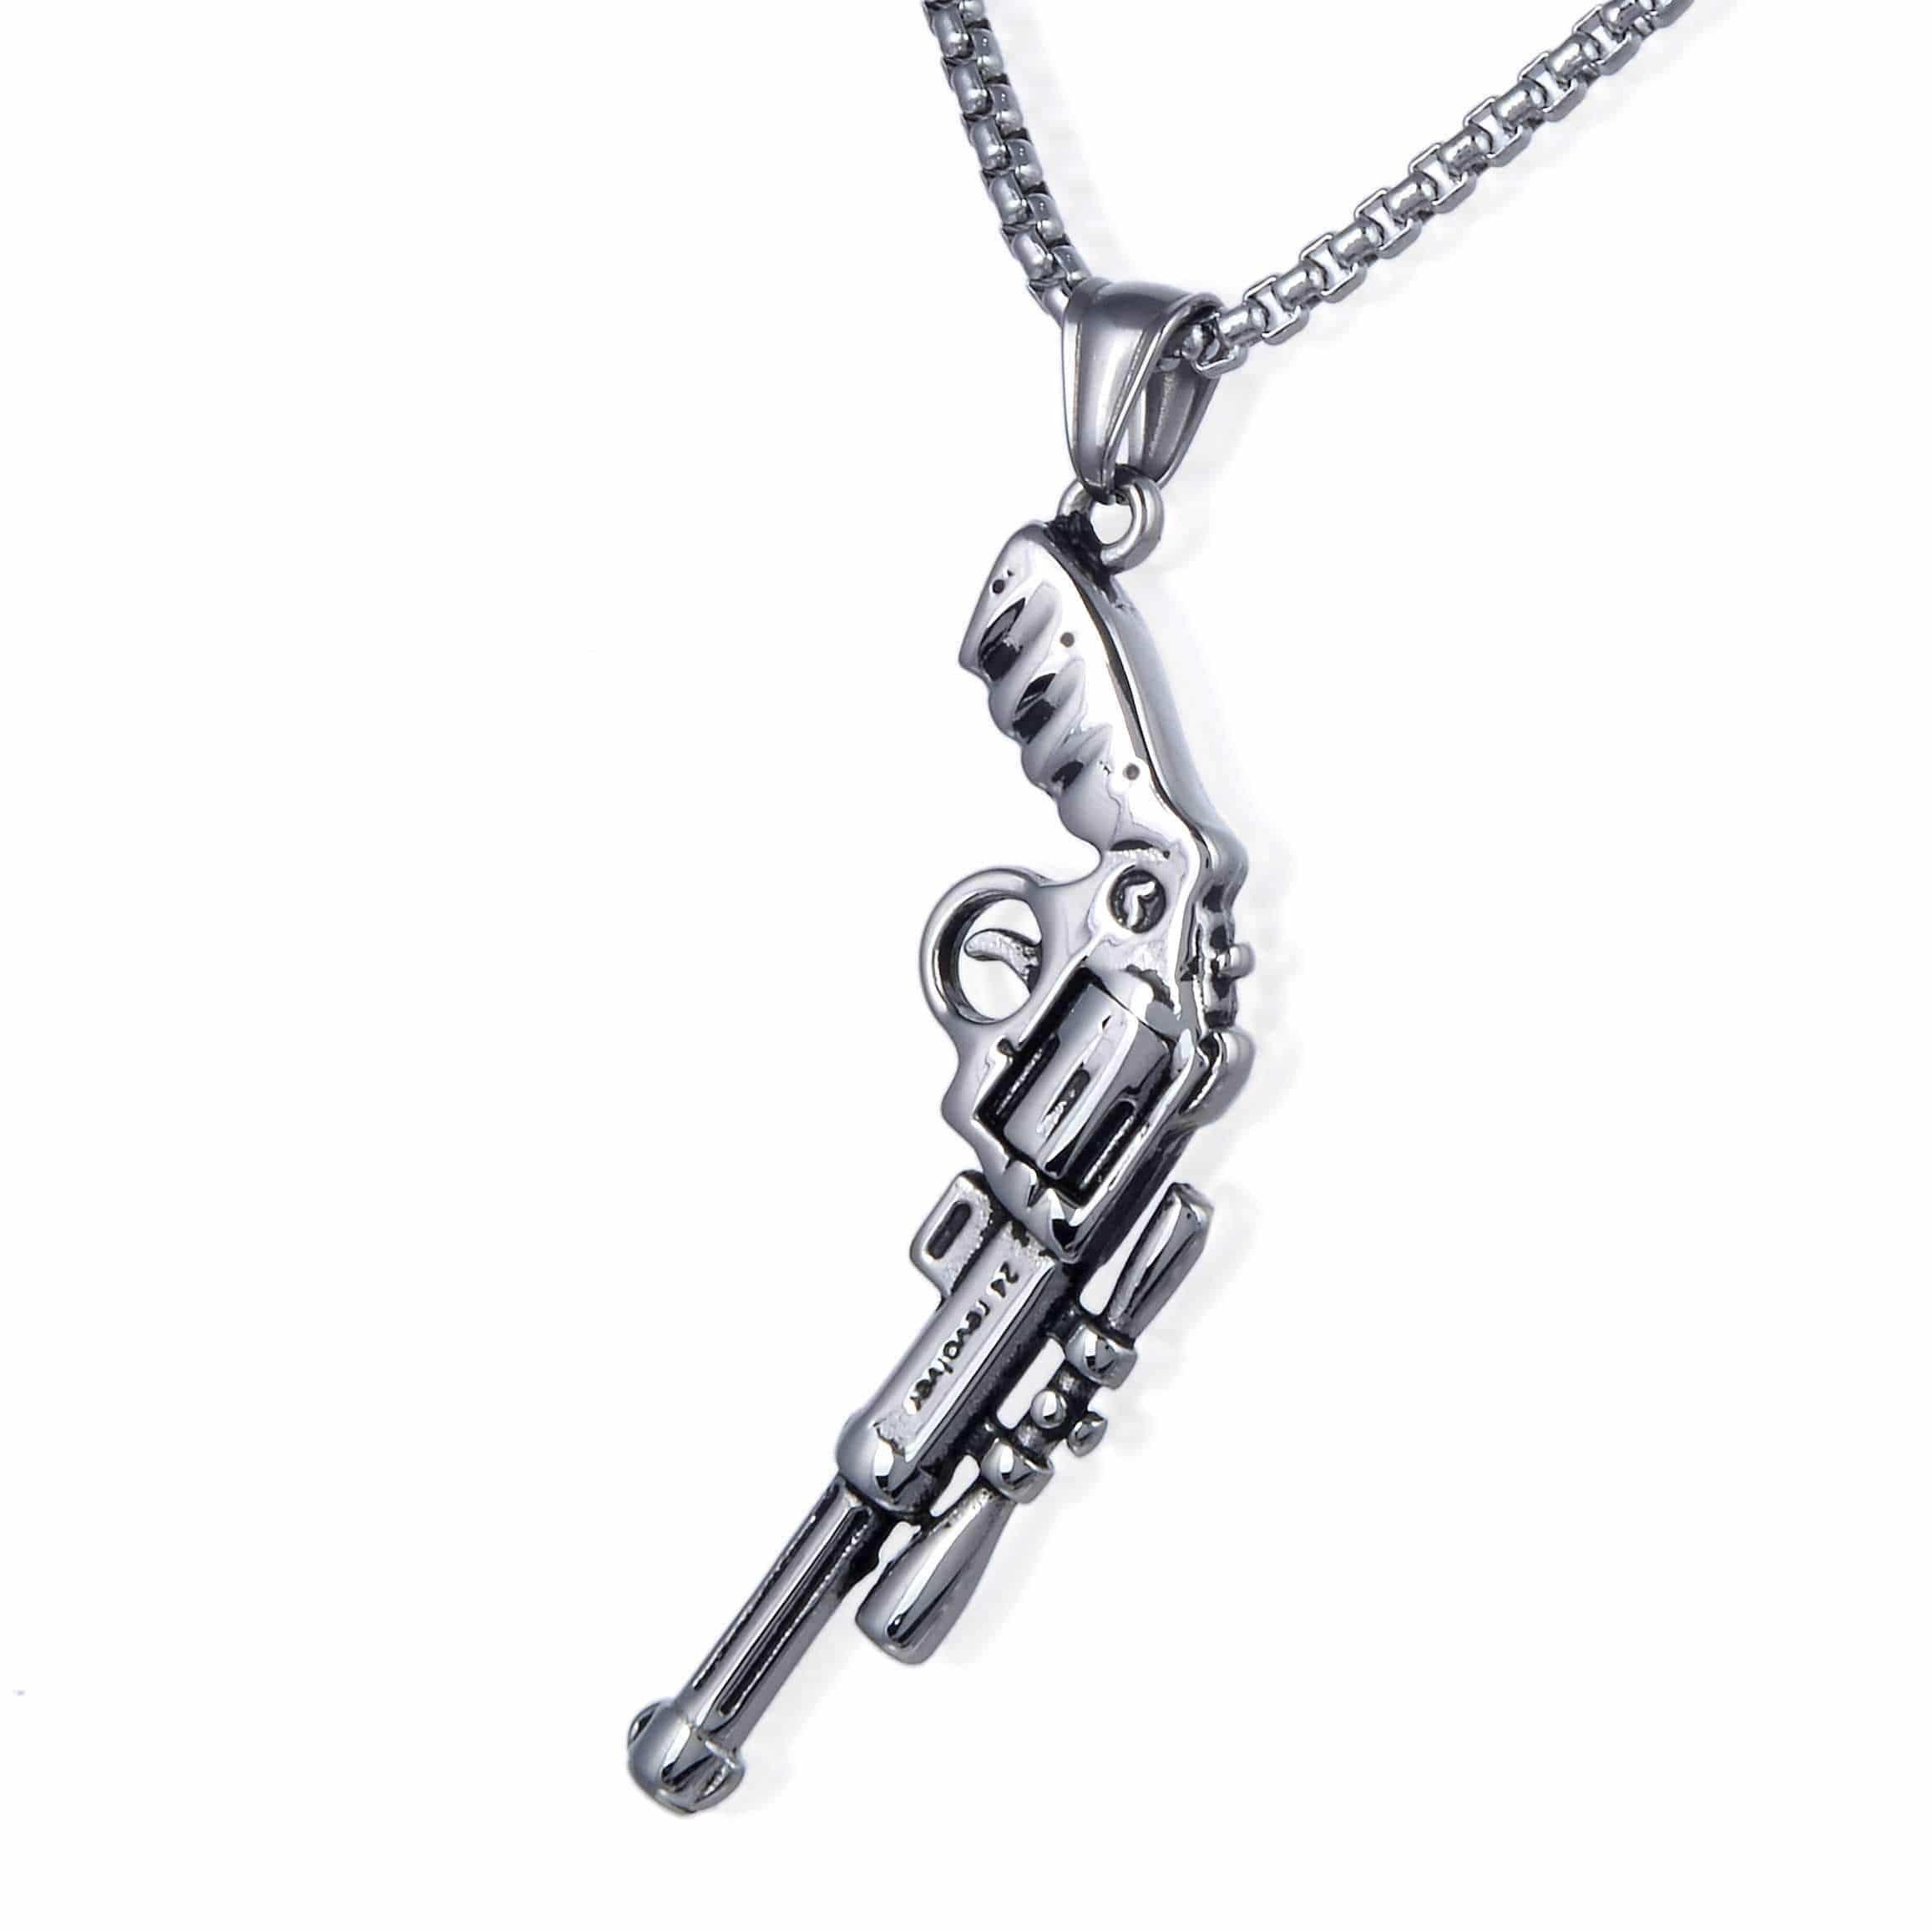 Kalifano Steel Hearts Jewelry Steel Hearts Pistol with Scope Necklace SHN120-81